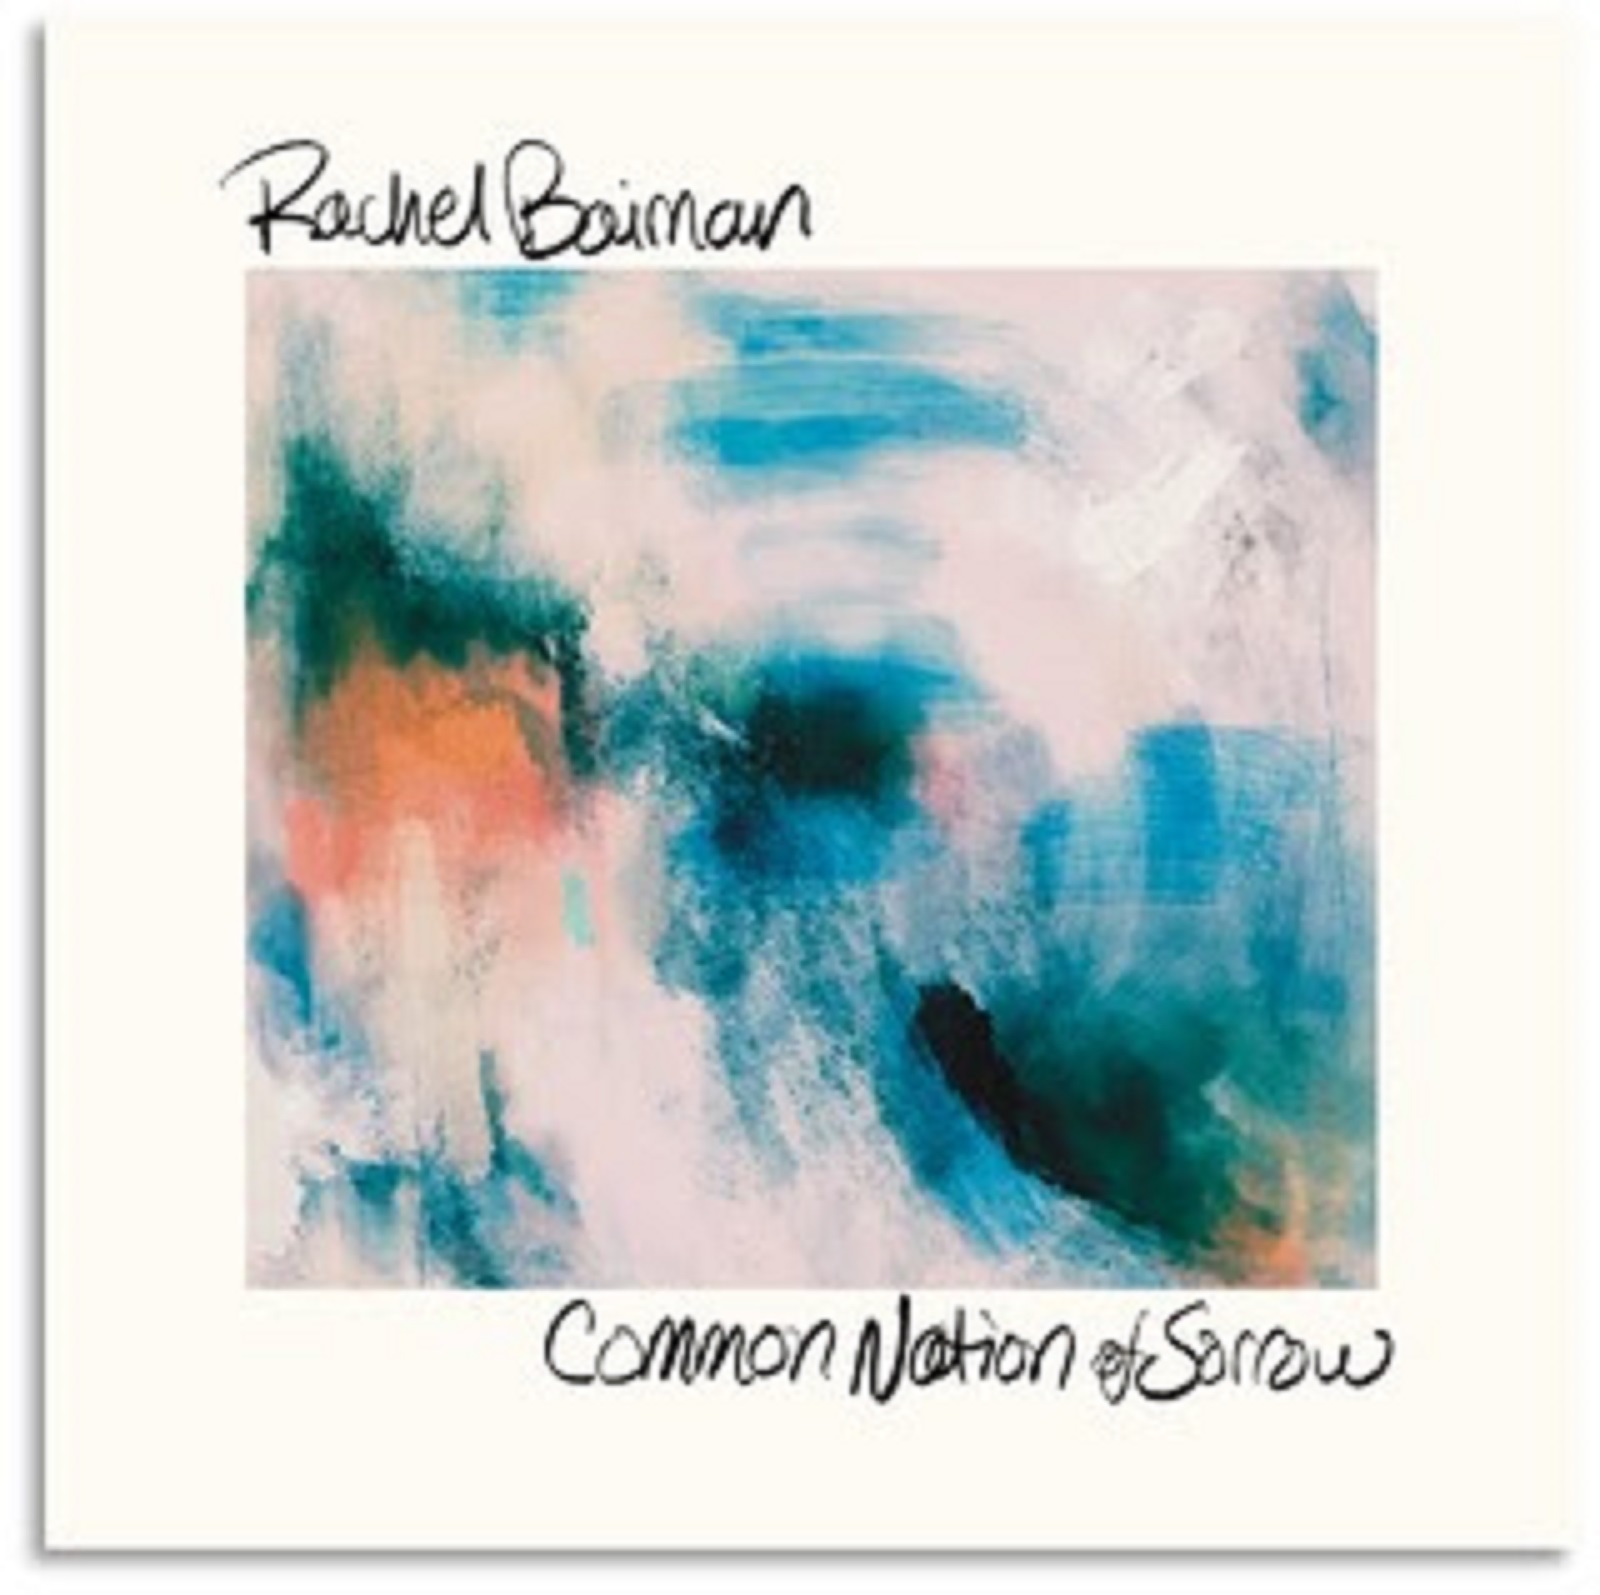 Rachel Baiman’s new album "Common Nation of Sorrow" out now